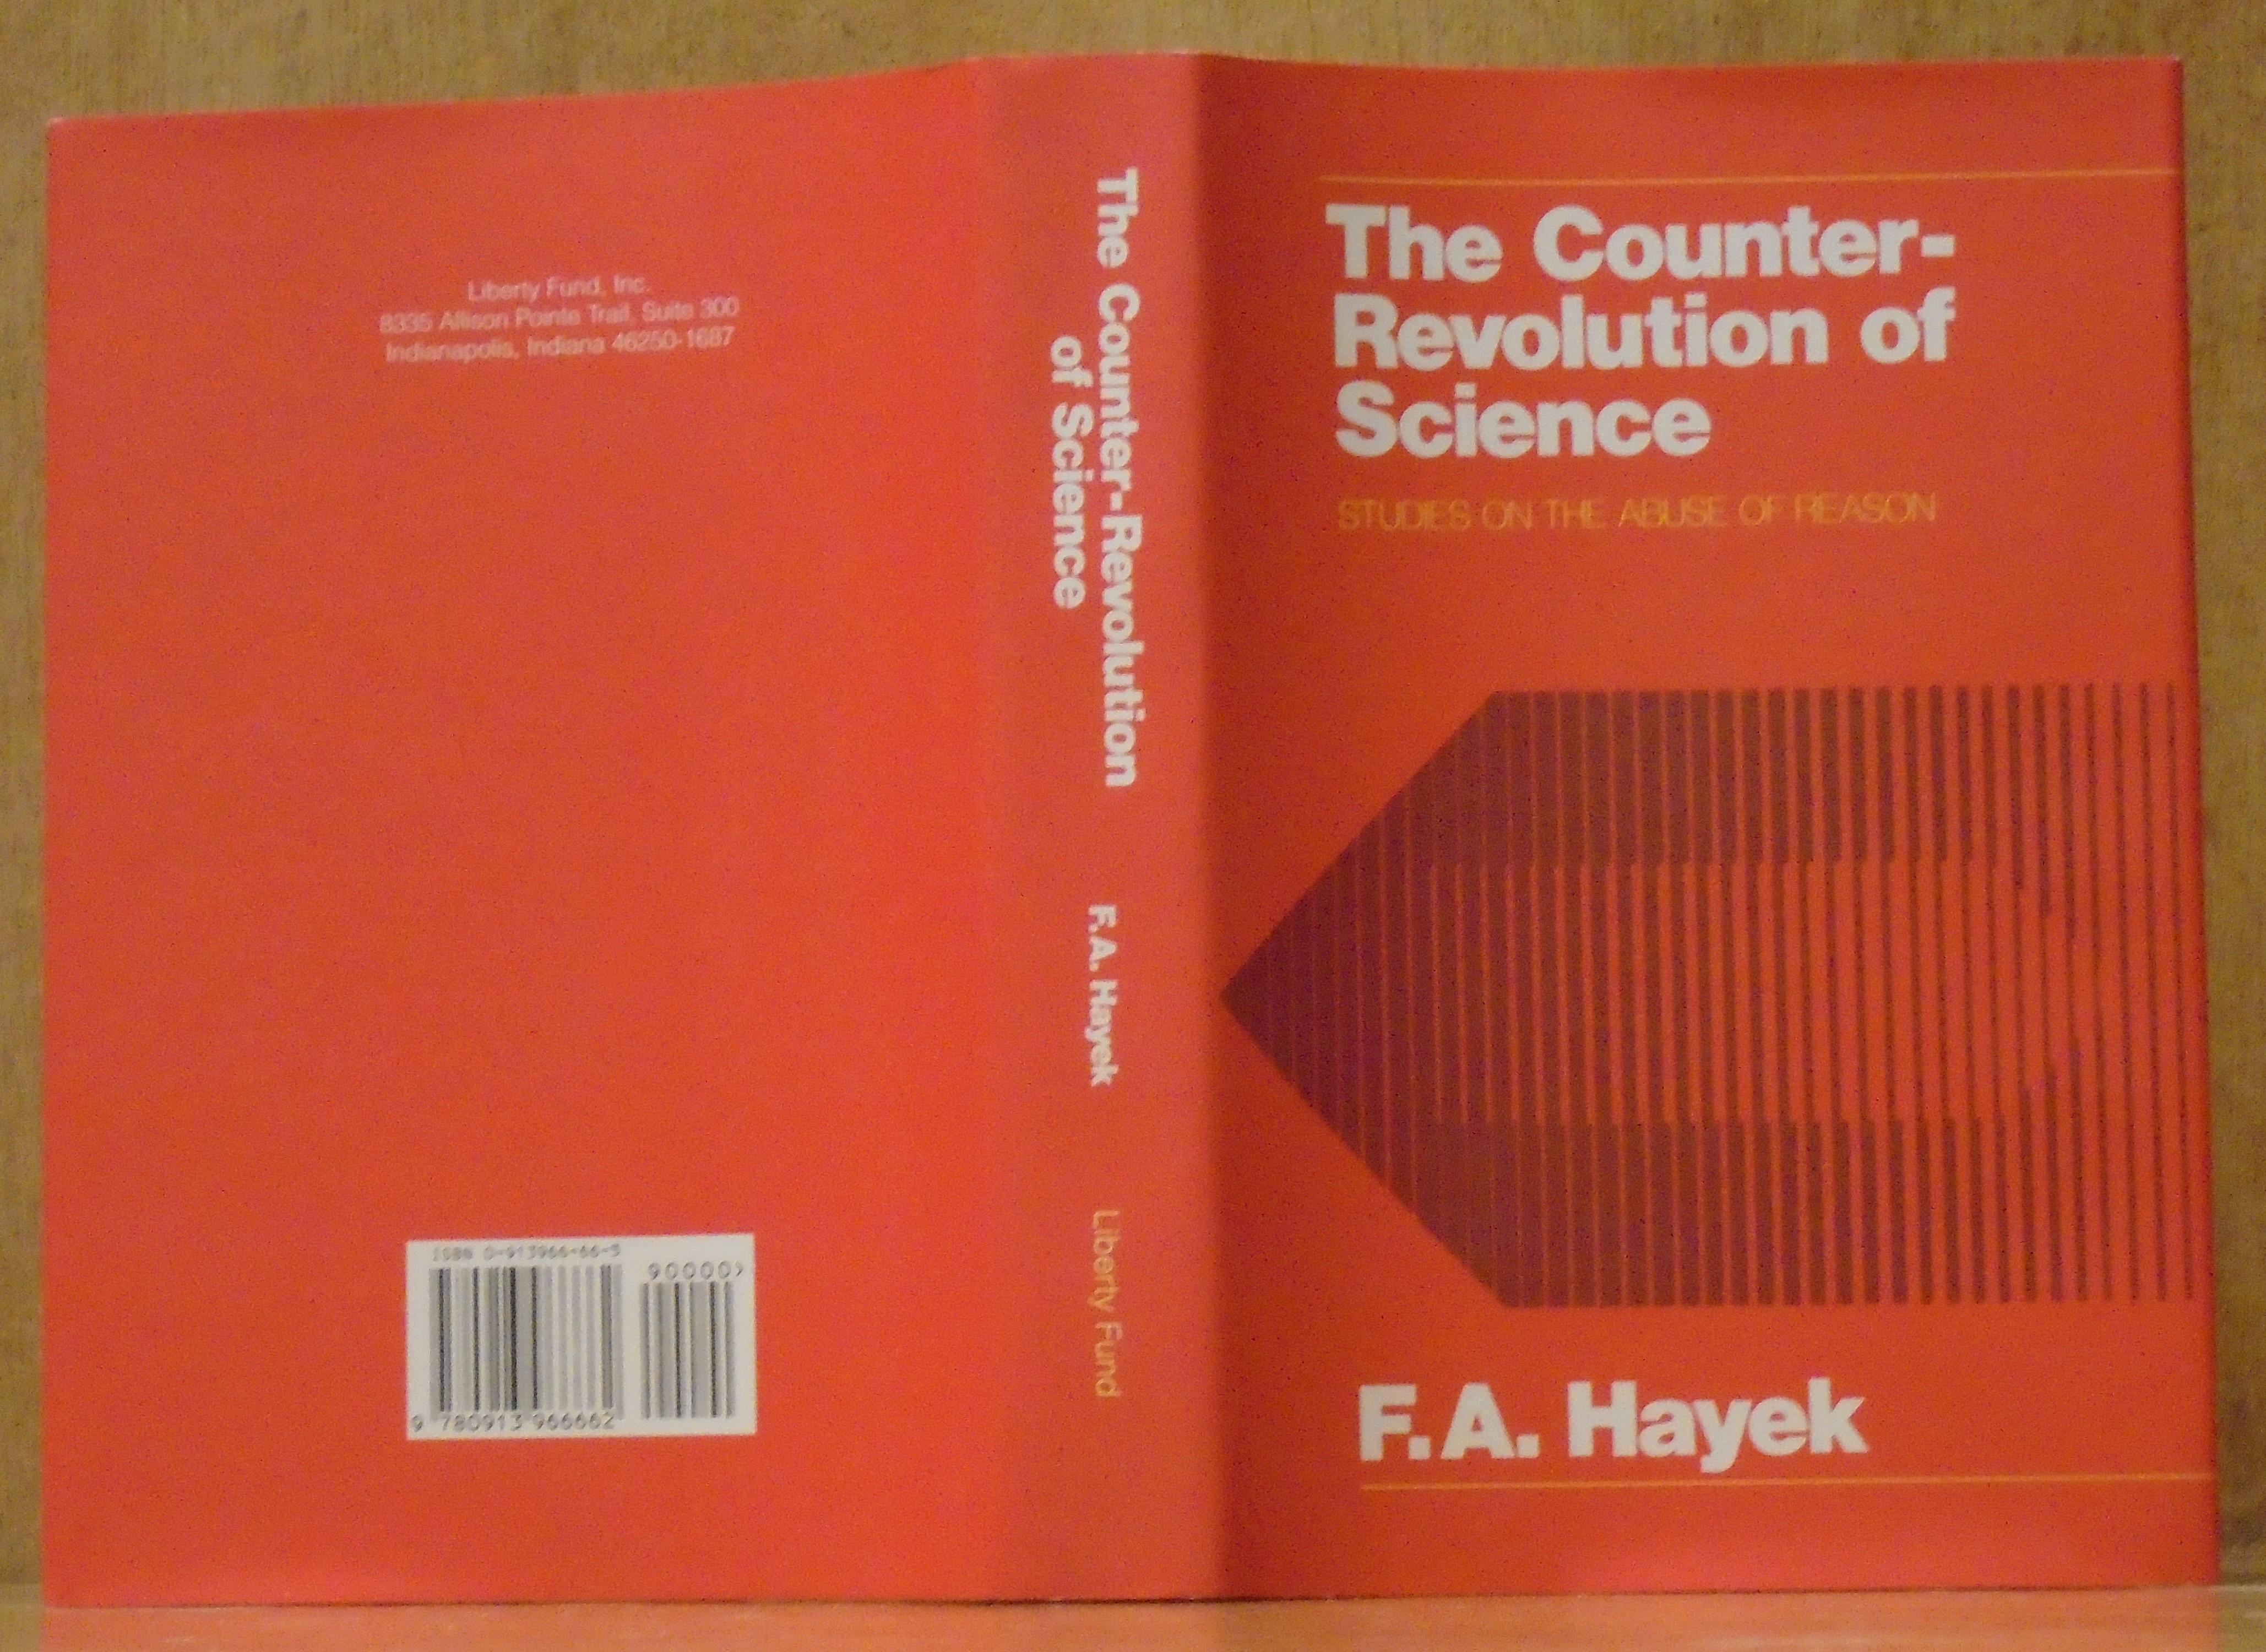 Counter Revolution of Science: Studies on the Abuse of Reason - Hayek, F. A. (Friedrich August von)